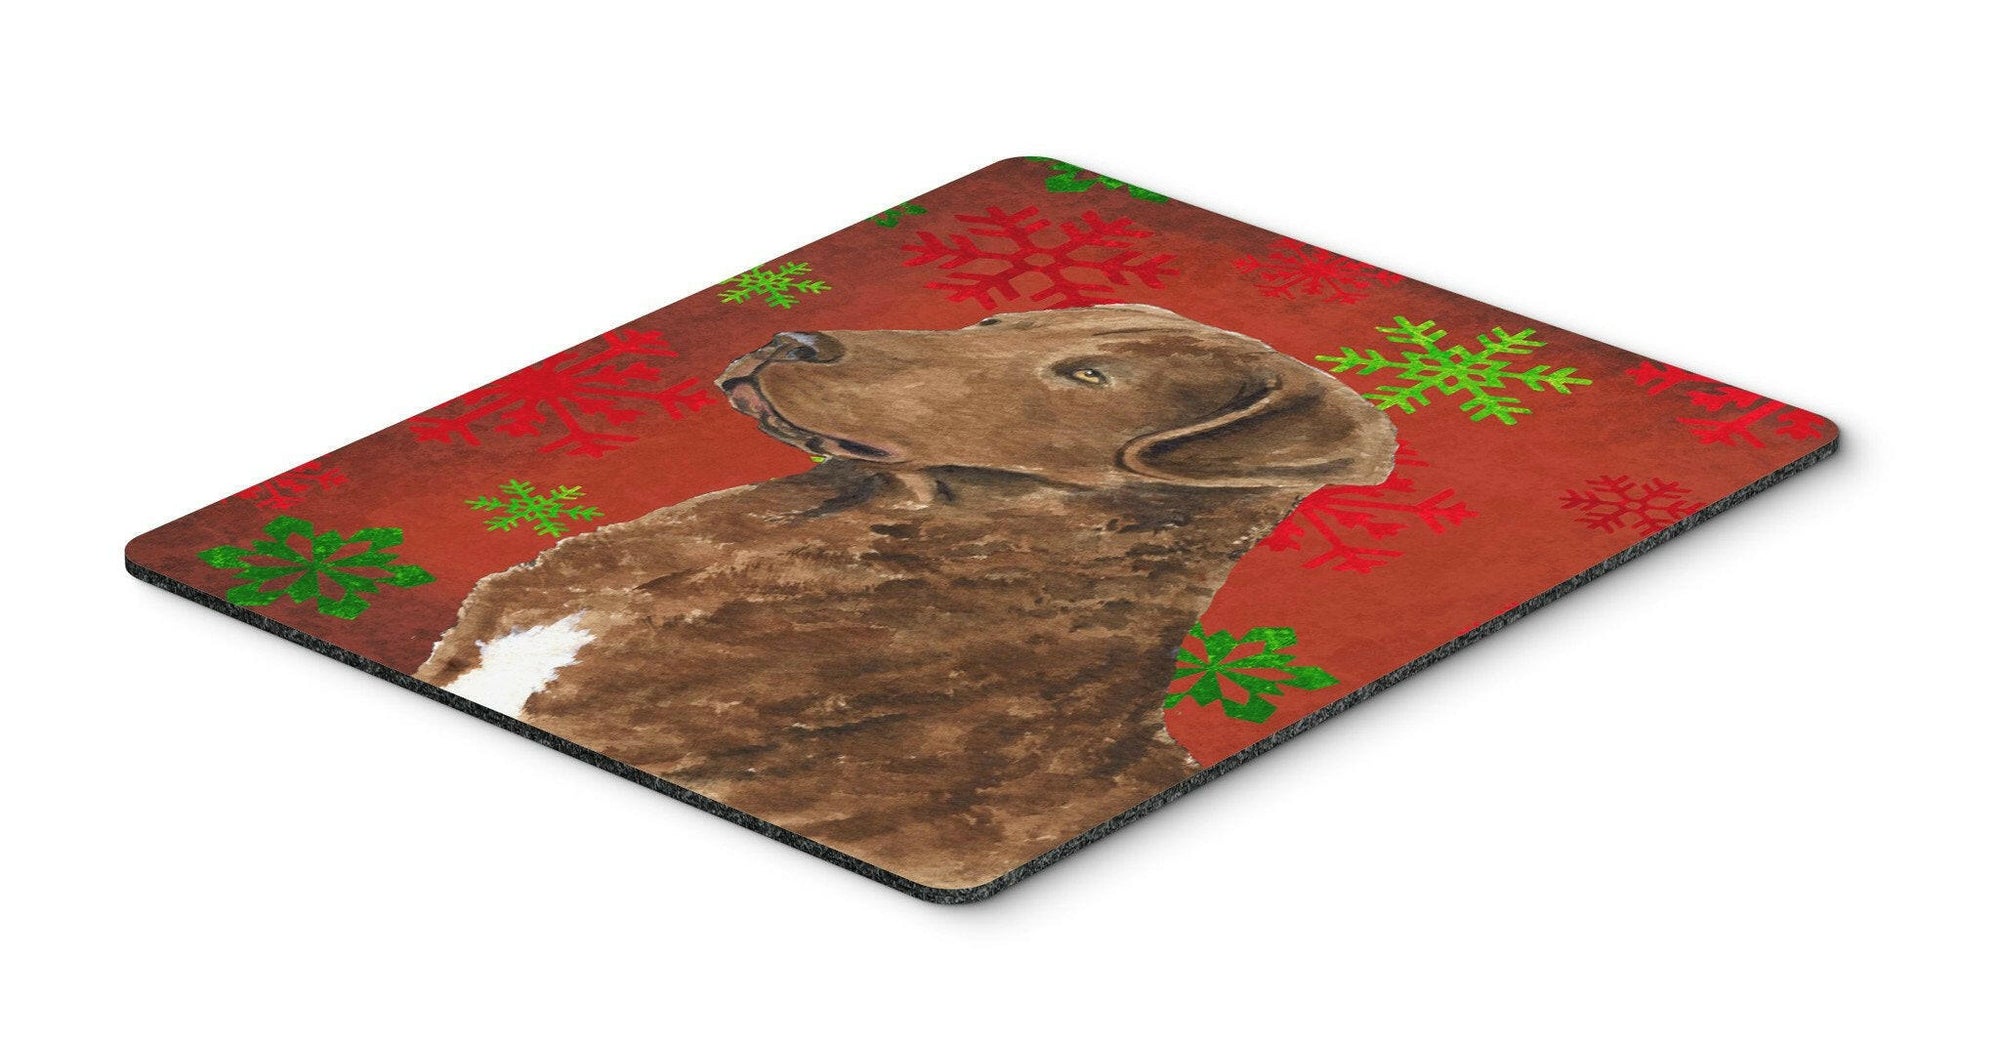 Chesapeake Bay Retriever Snowflakes Christmas Mouse Pad, Hot Pad or Trivet by Caroline's Treasures